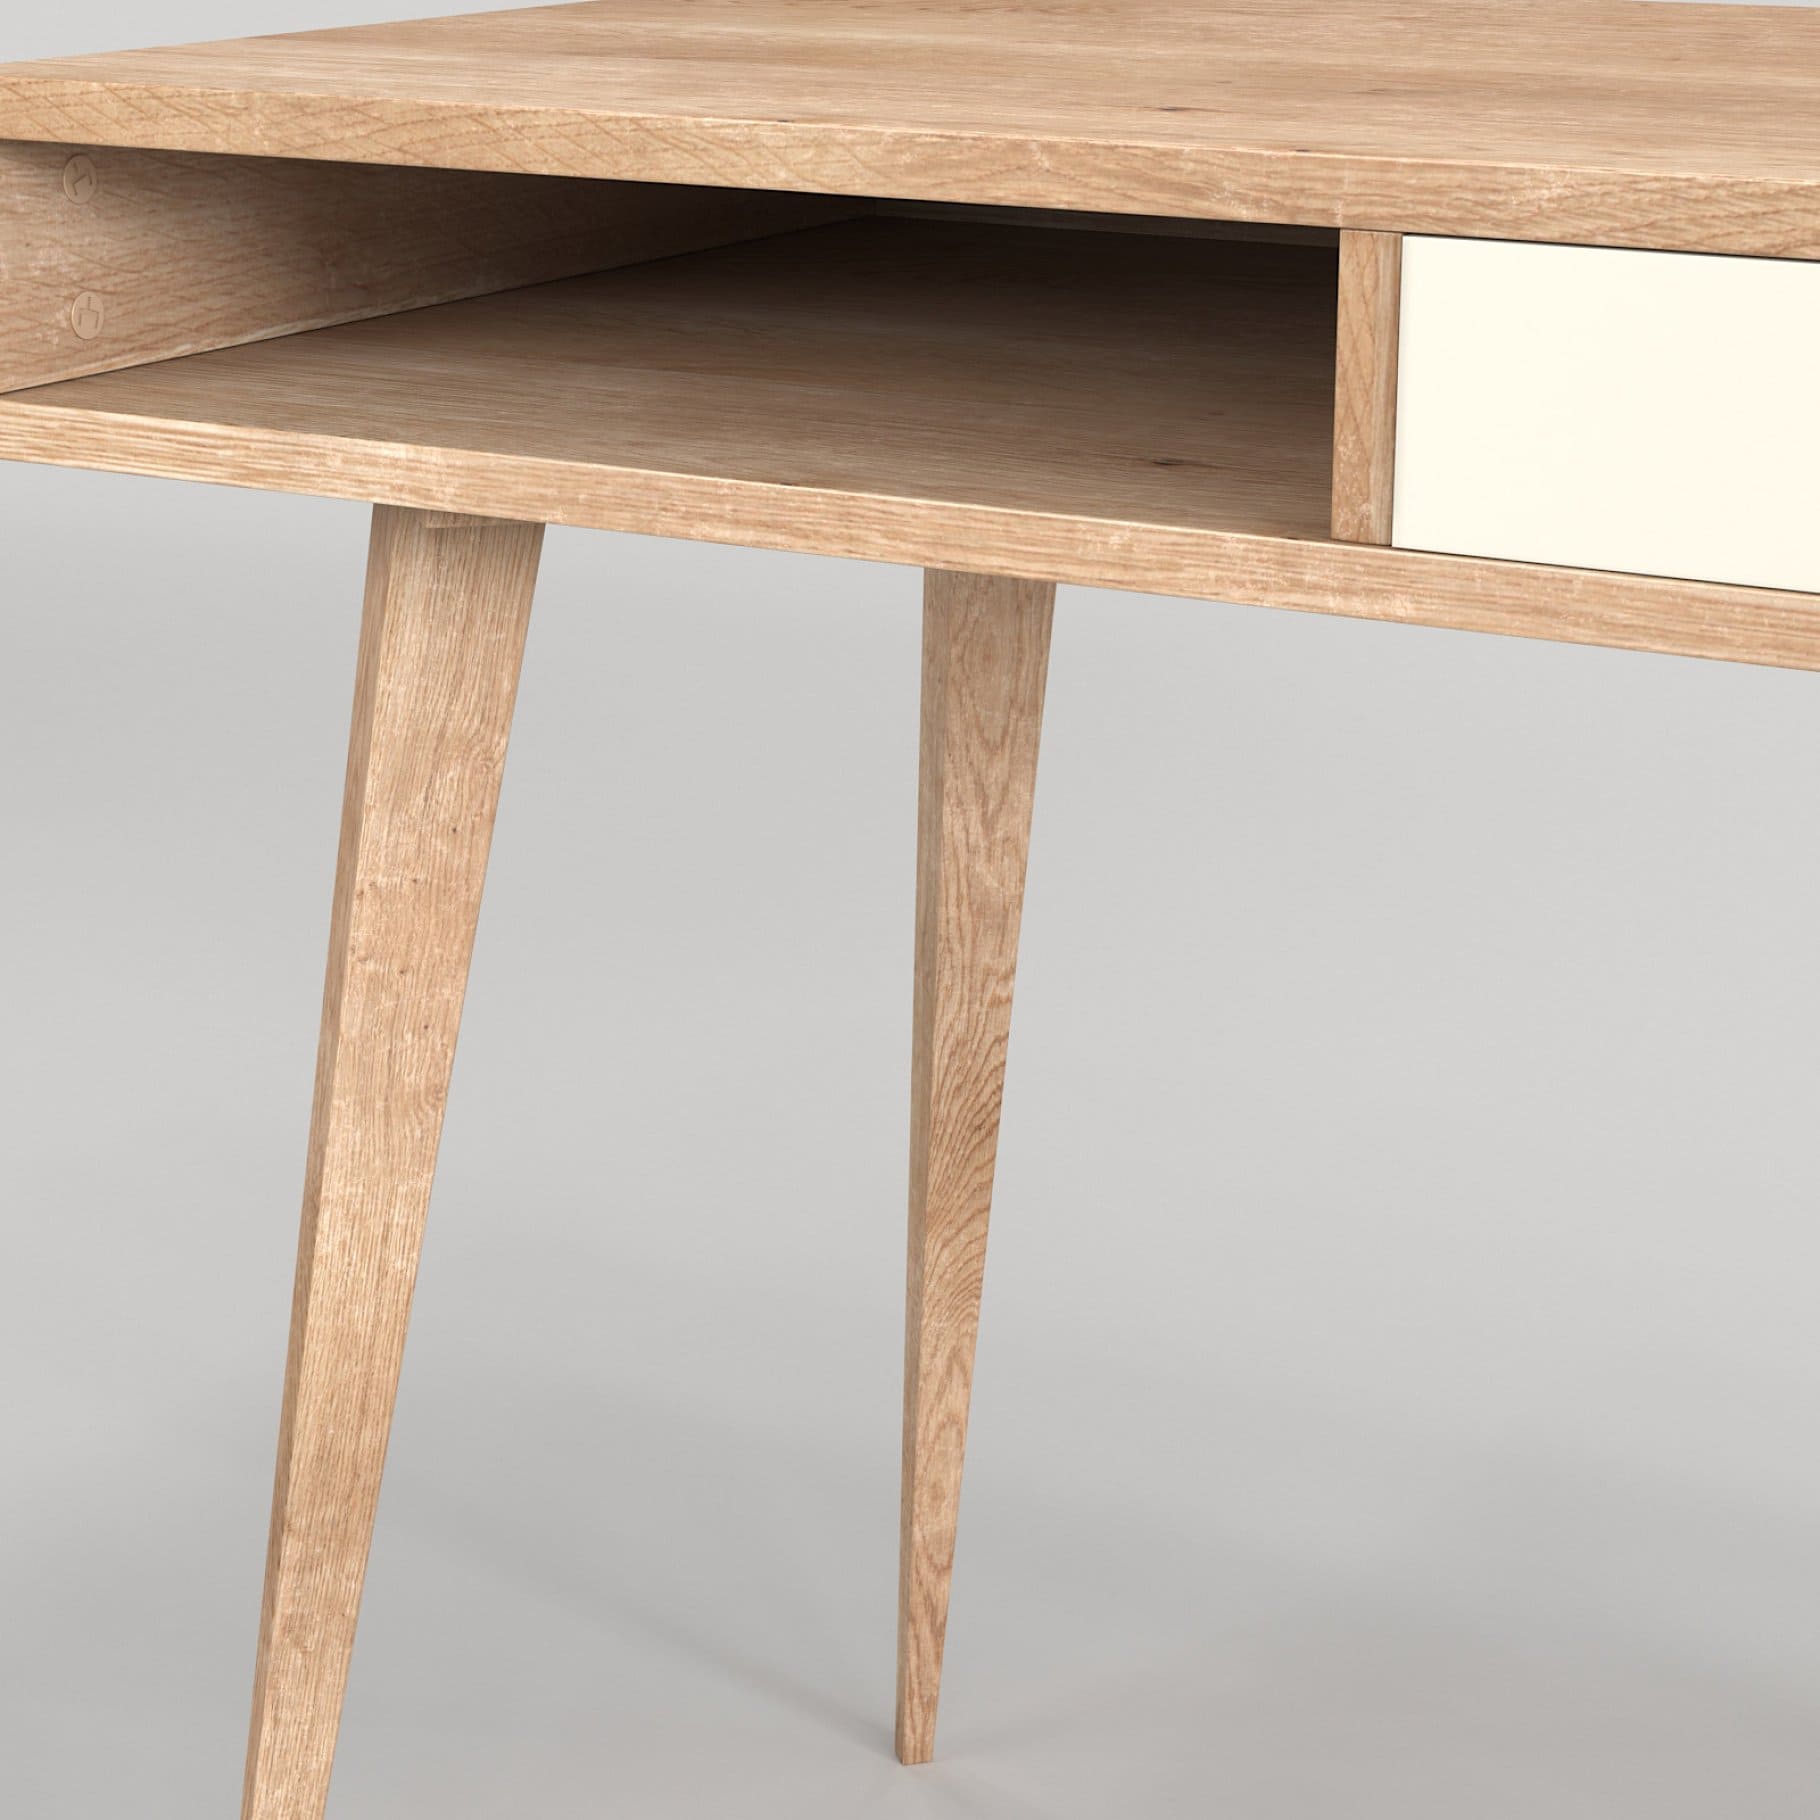 Photo of the left open shelf of a brown wooden Scandinavian desk with shelves.